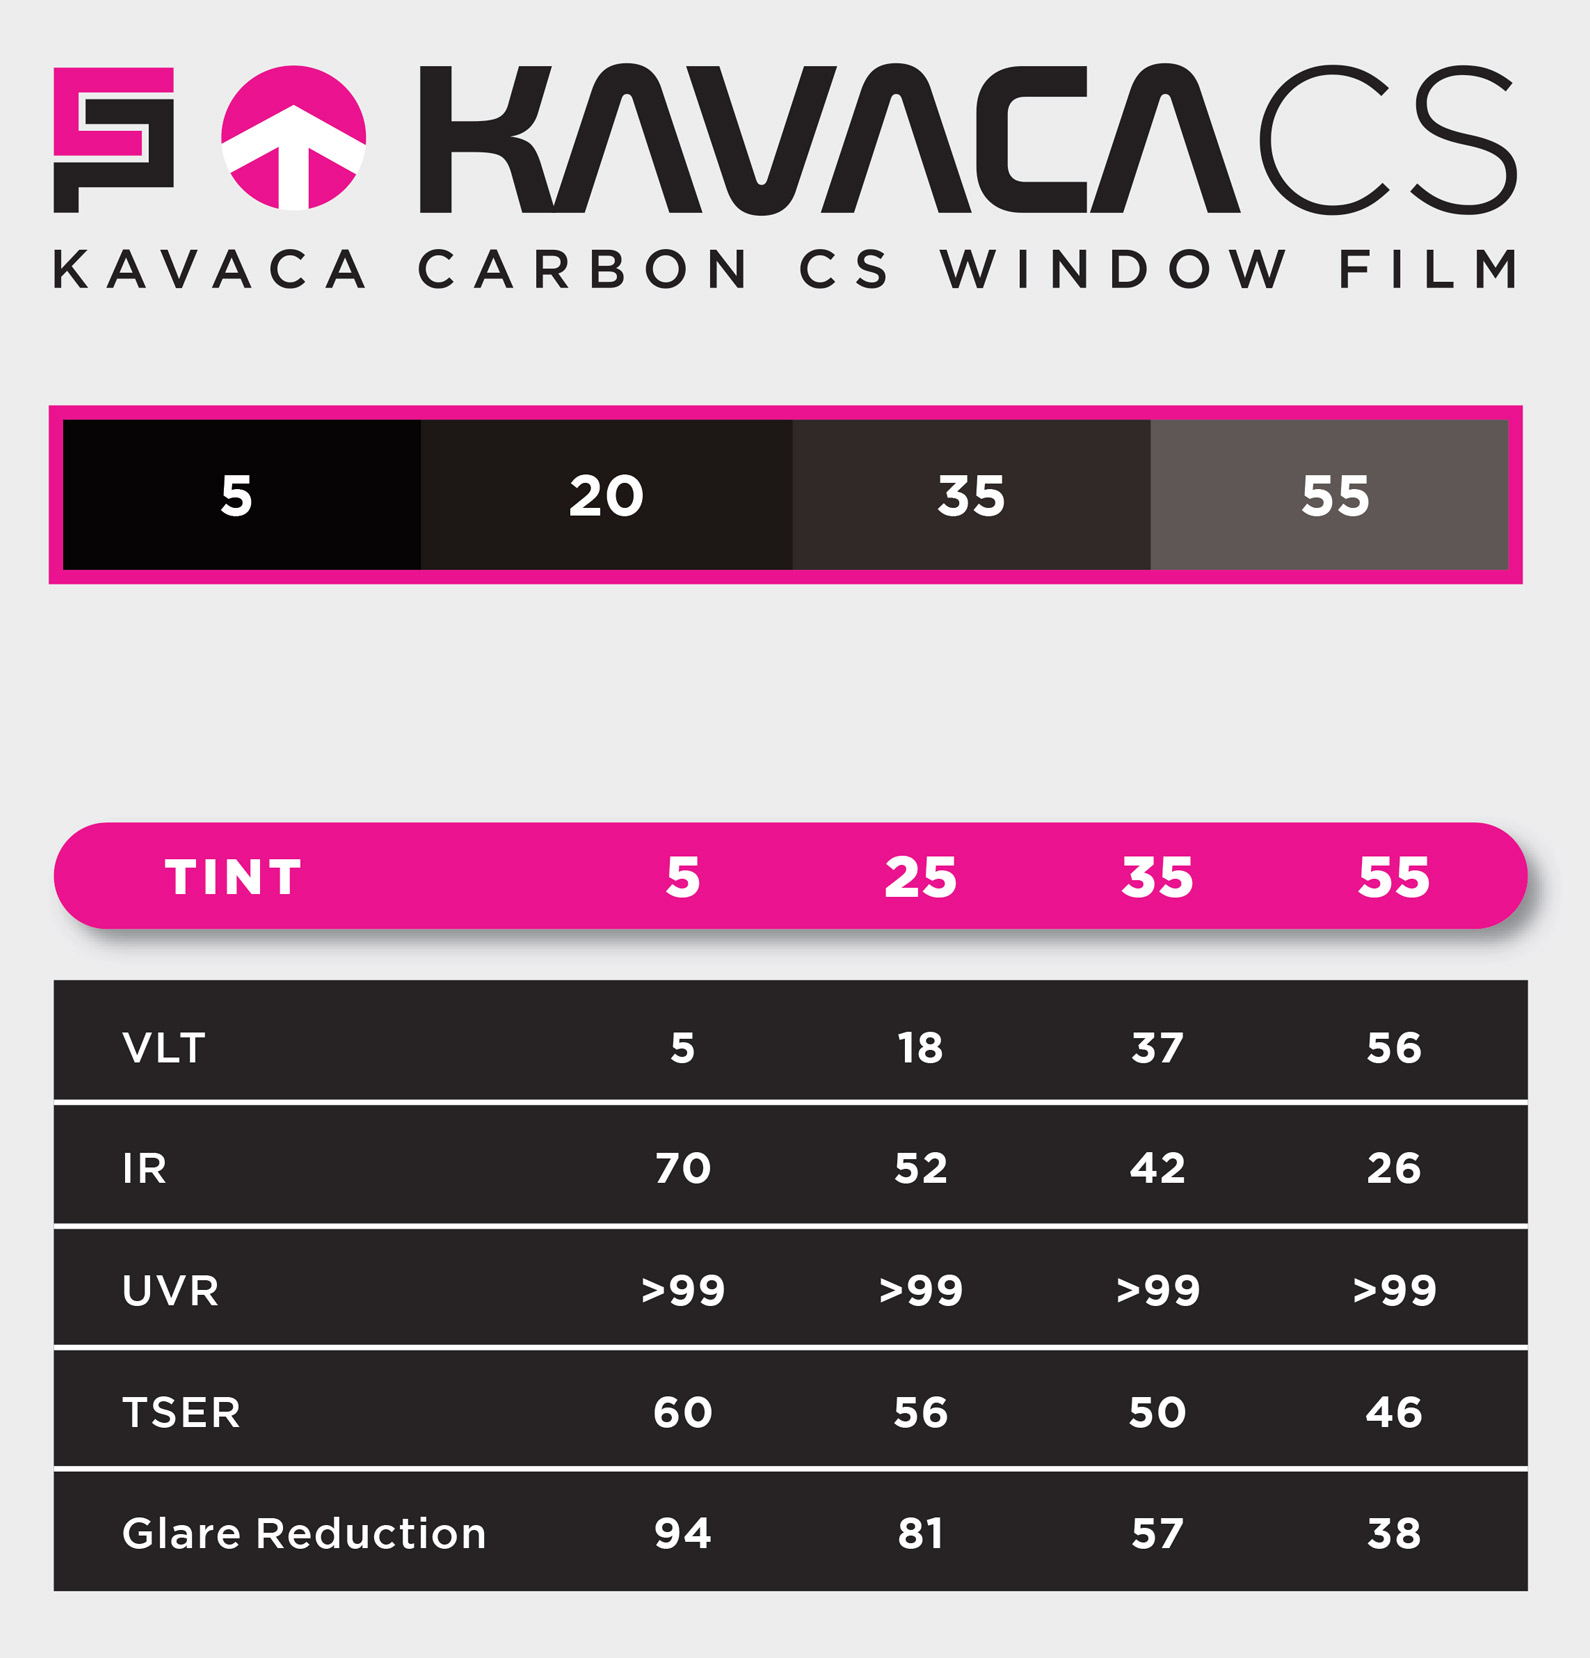 ceramic_pro_kavaca_carbon_cs_window_film_spec_chart_2021_main